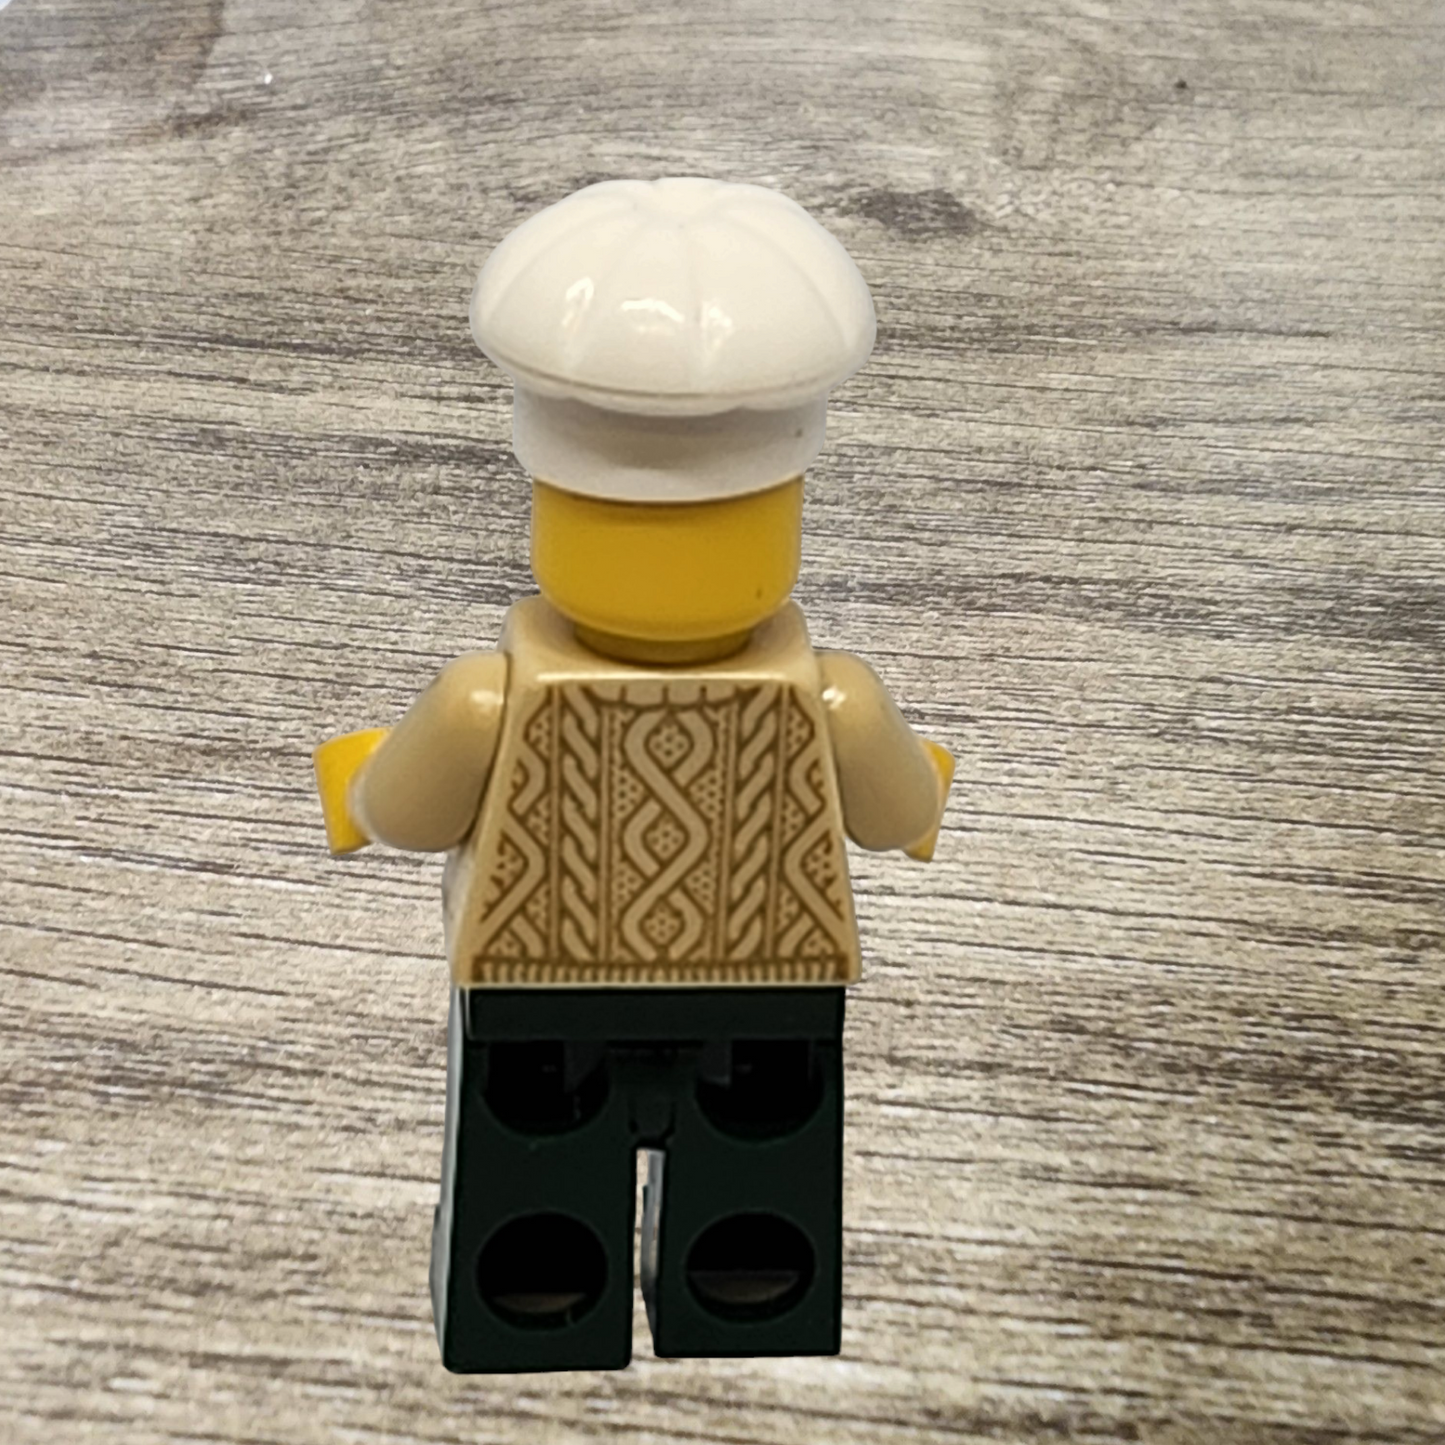 Chef Lego Minifigure Tan Knit Sweater Bushy Mustache hol129 2018 Day 17 60201